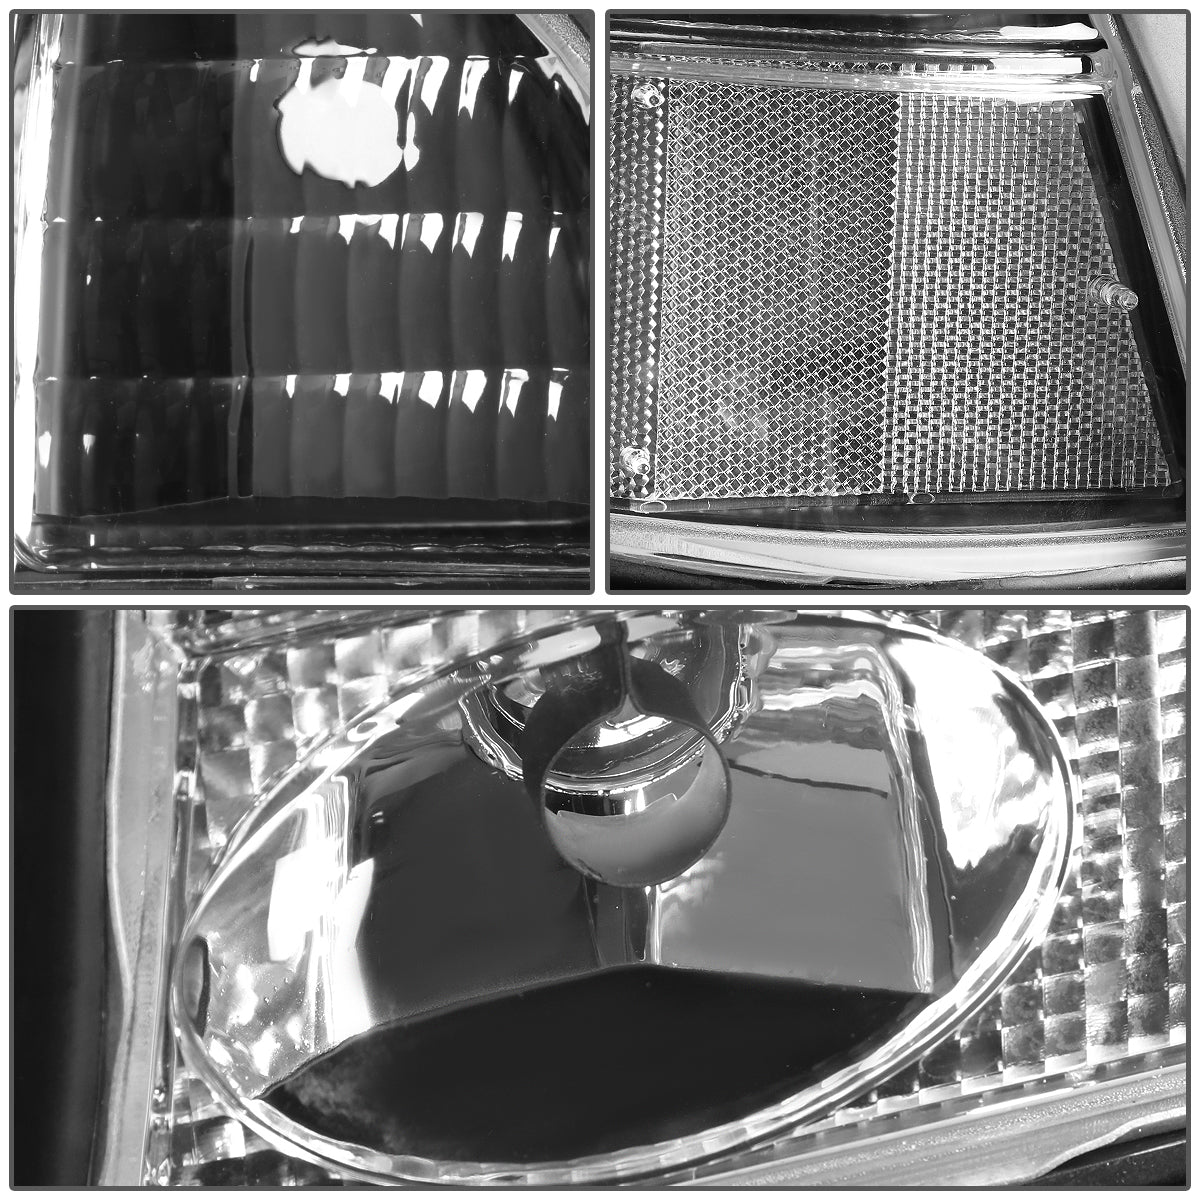 Factory Style Headlights<br>98-05 GMC Jimmy Sonoma, 98-01 Oldsmobile Bravada